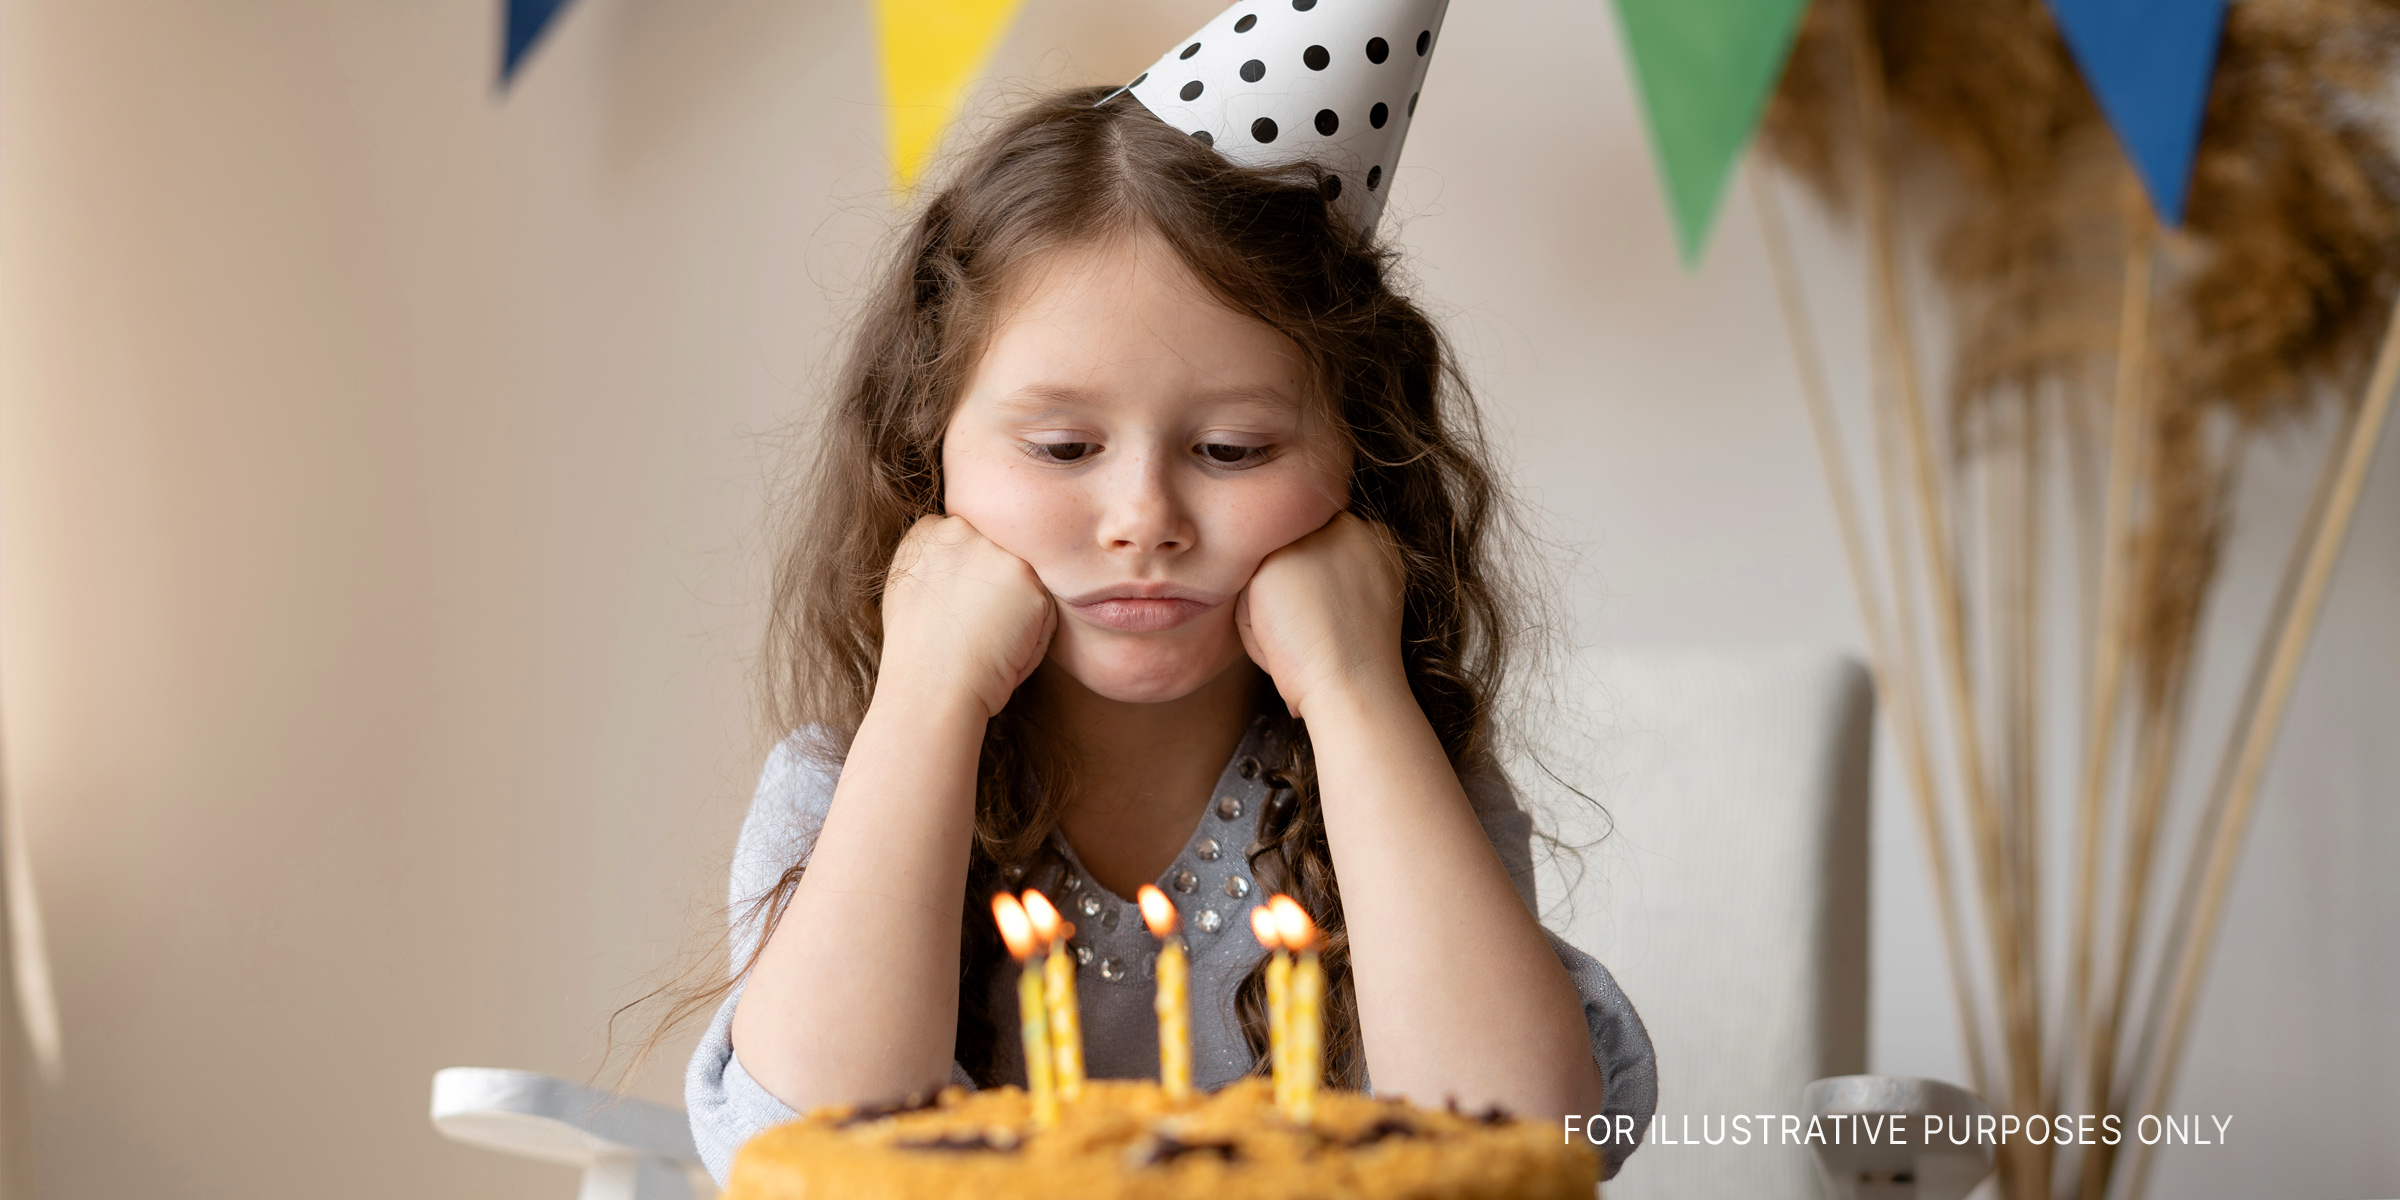 A sad birthday girl | Source: Shutterstock